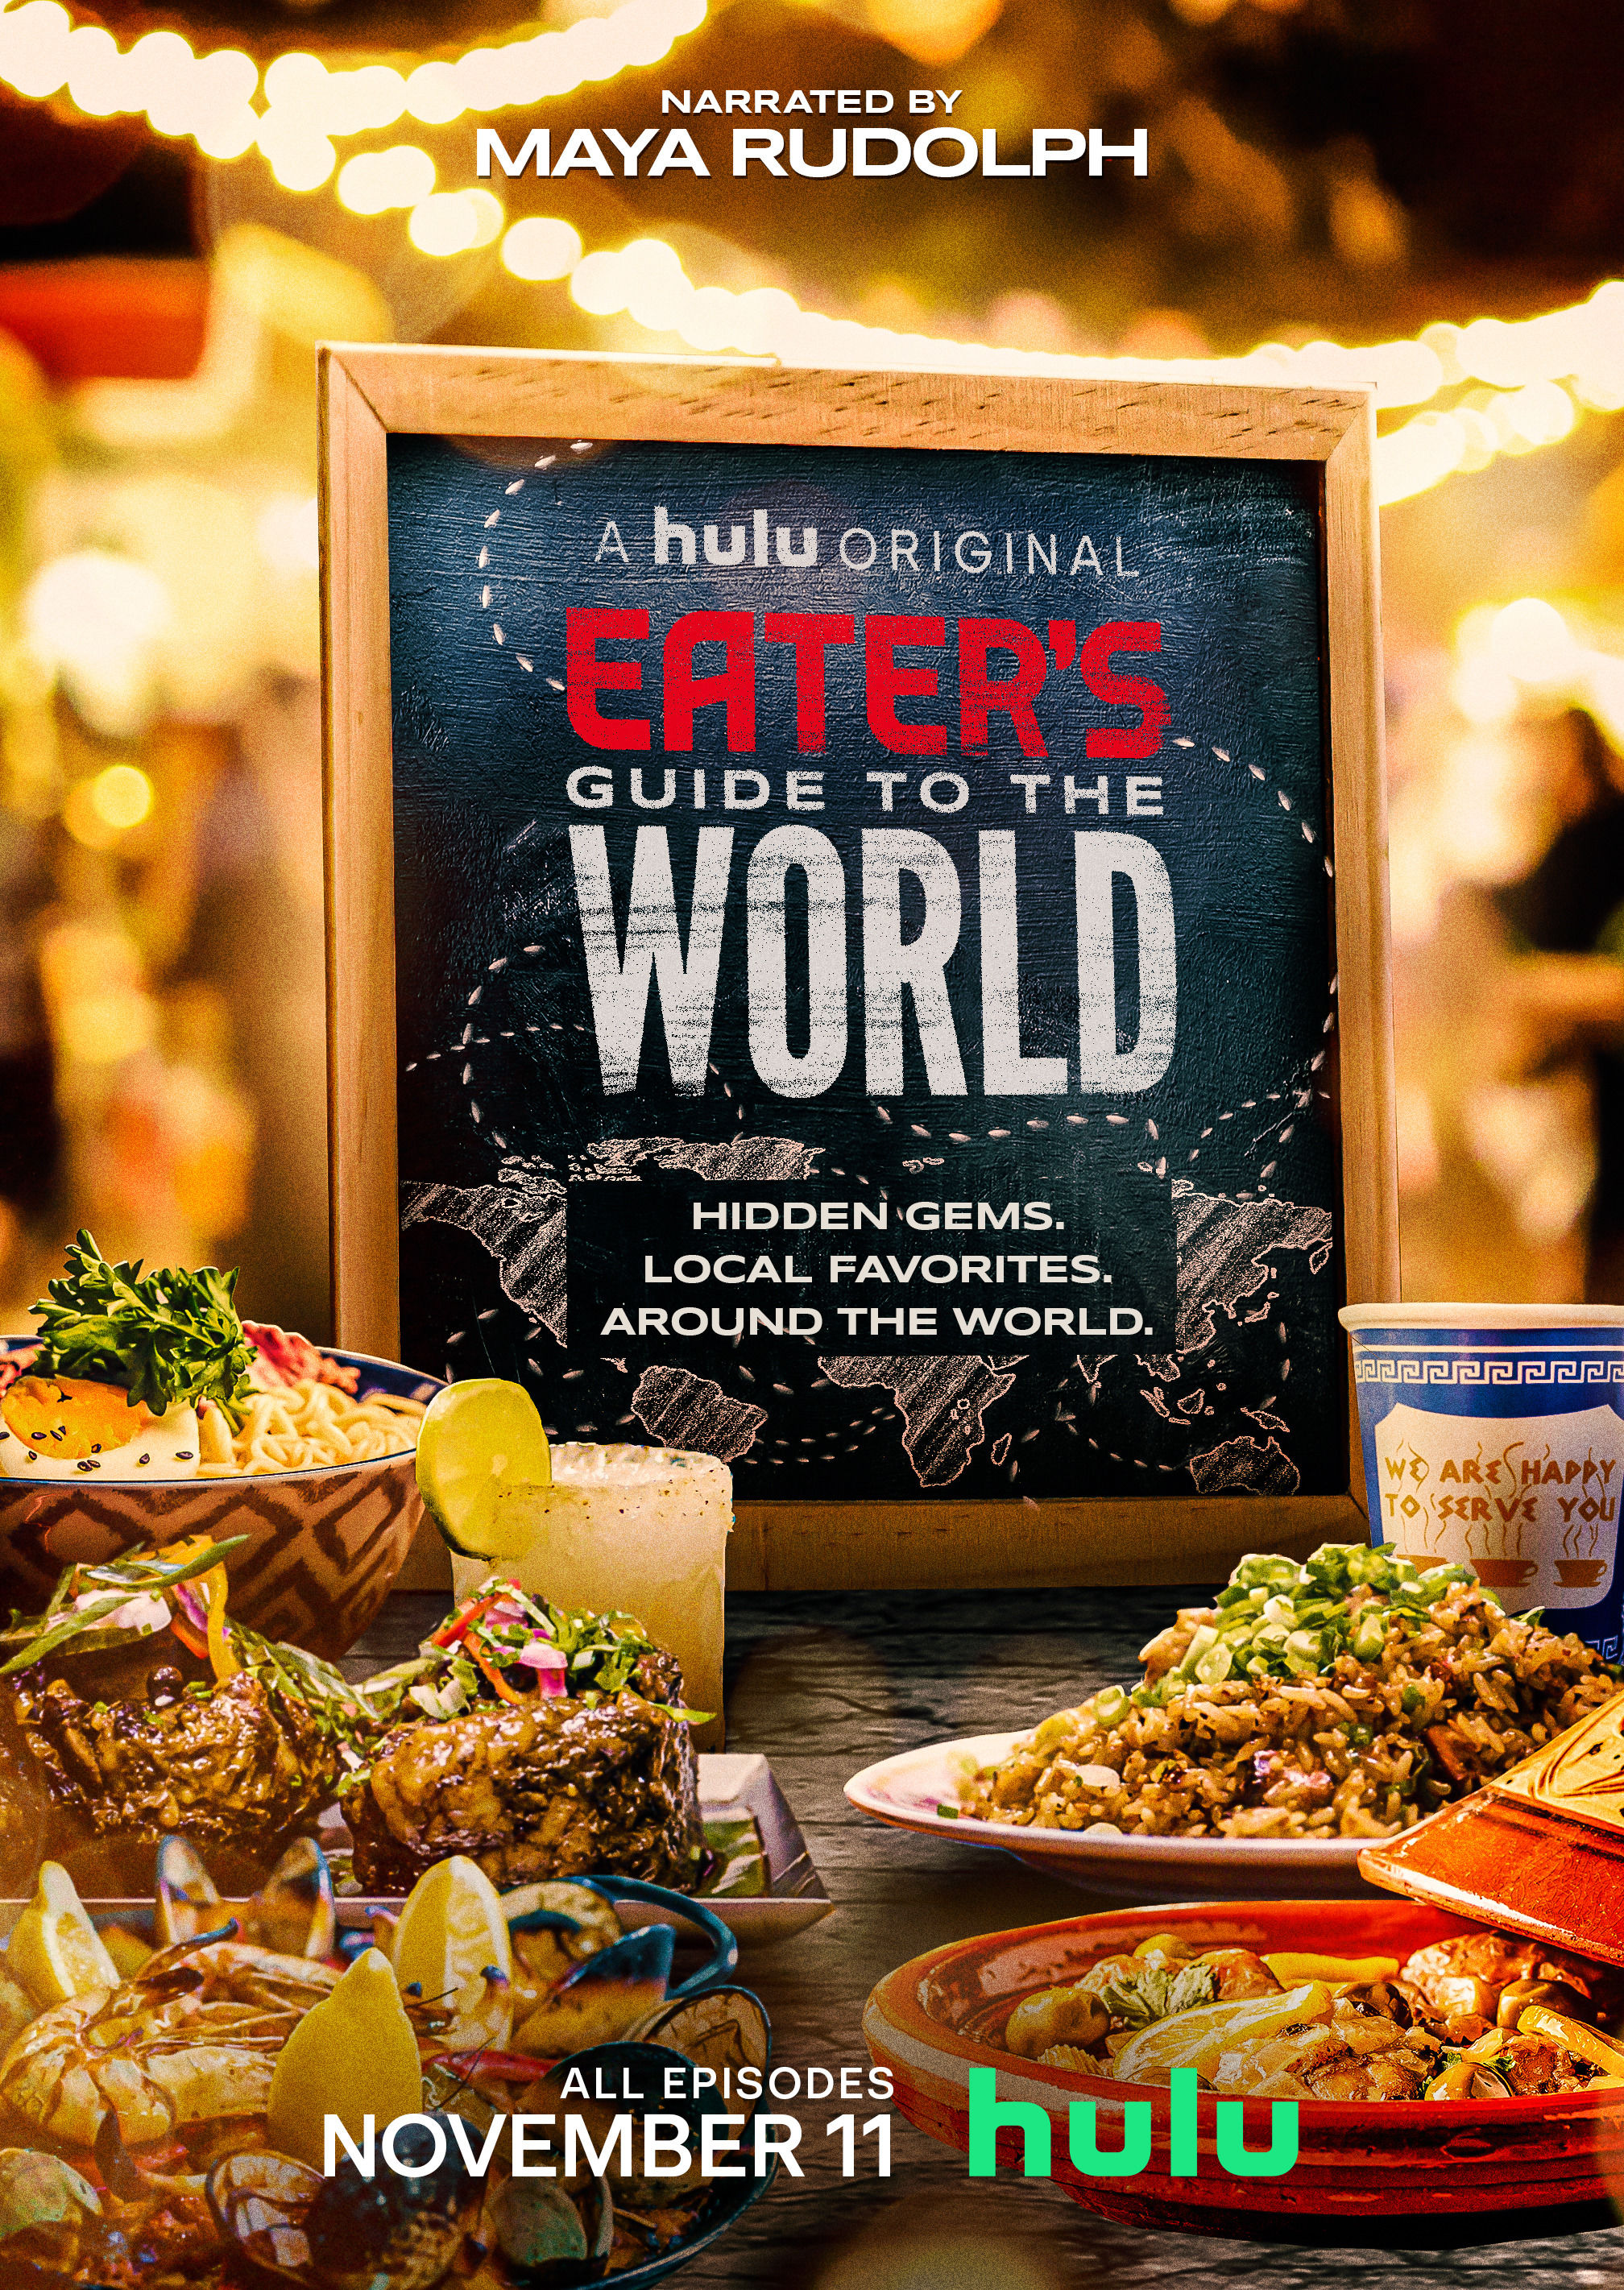 Eater's Guide to the World ne zaman